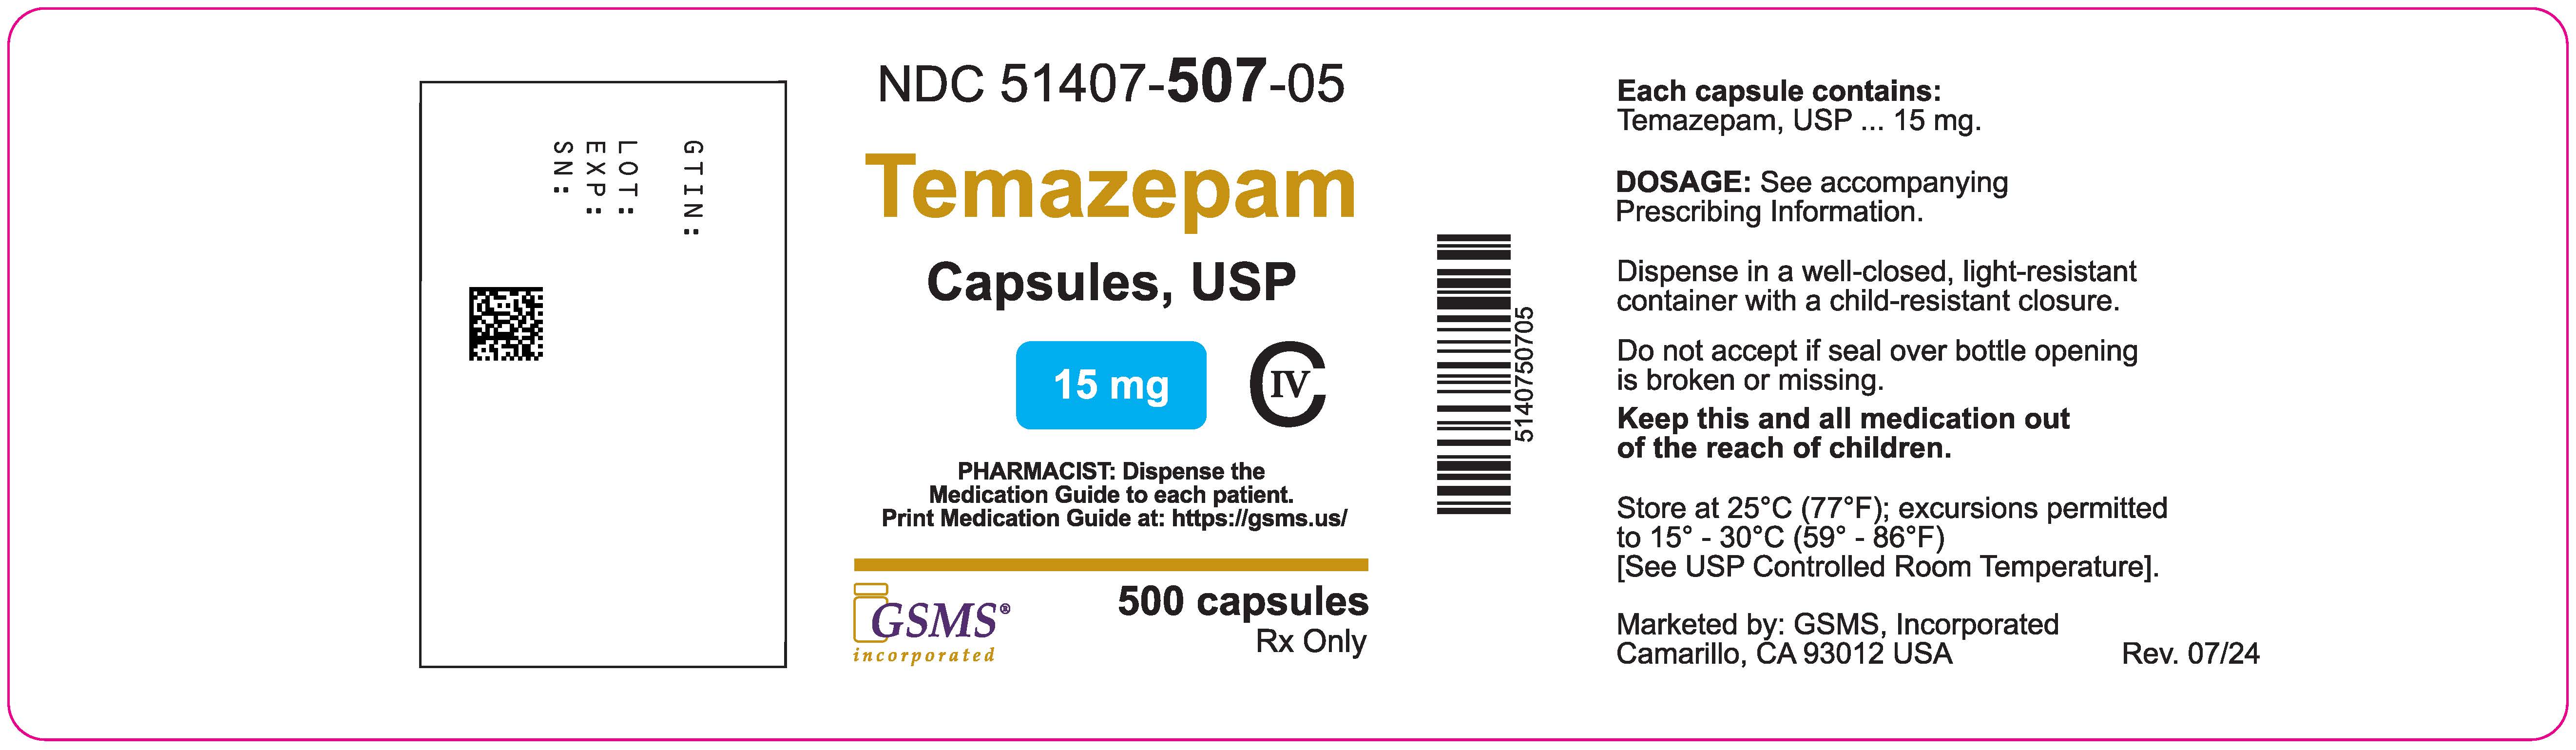 51407-507-05OL - Temazepam 15 mg - Rev. 0724.jpg